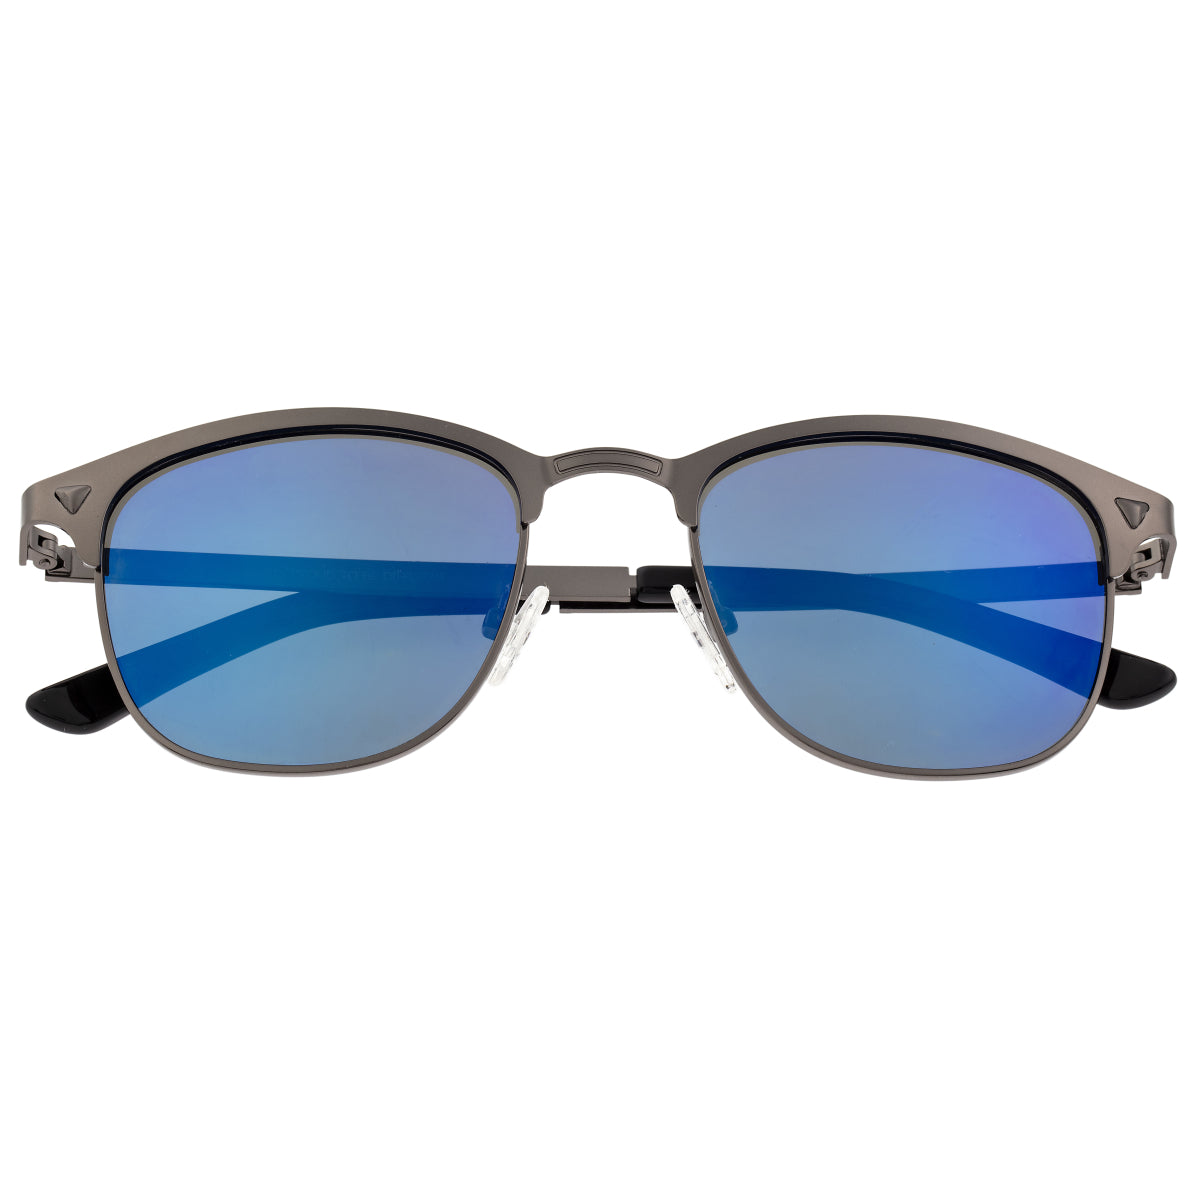 Breed Phase Titanium Polarized Sunglasses - Gunmetal/Blue - BSG058GM